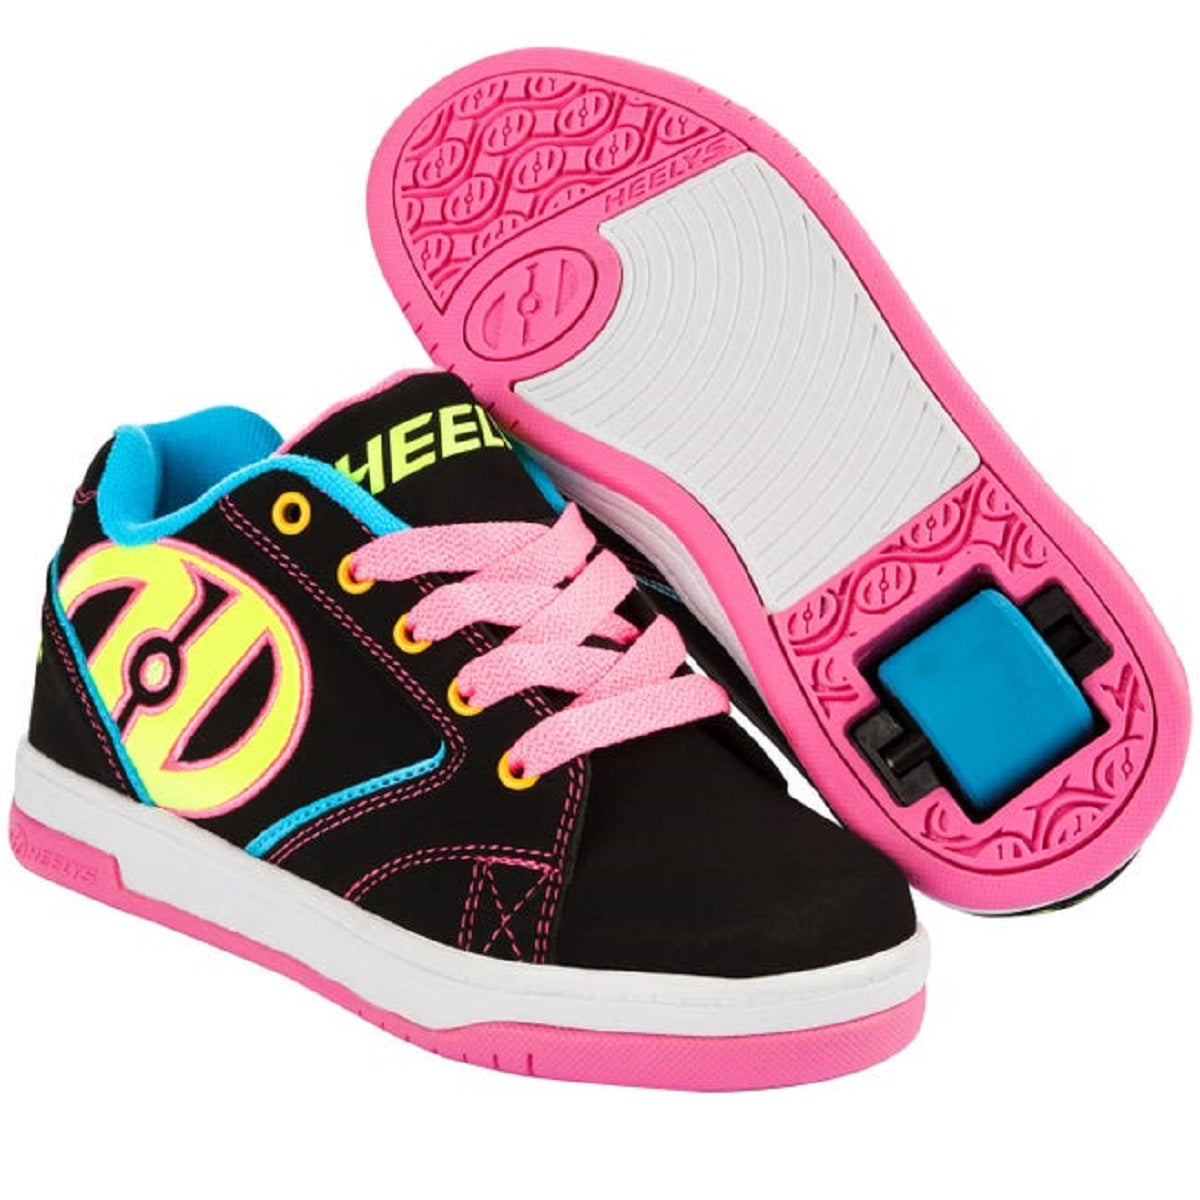 Heelys Propel 2.0 Girls Roller Shoes Black/Neon Multi